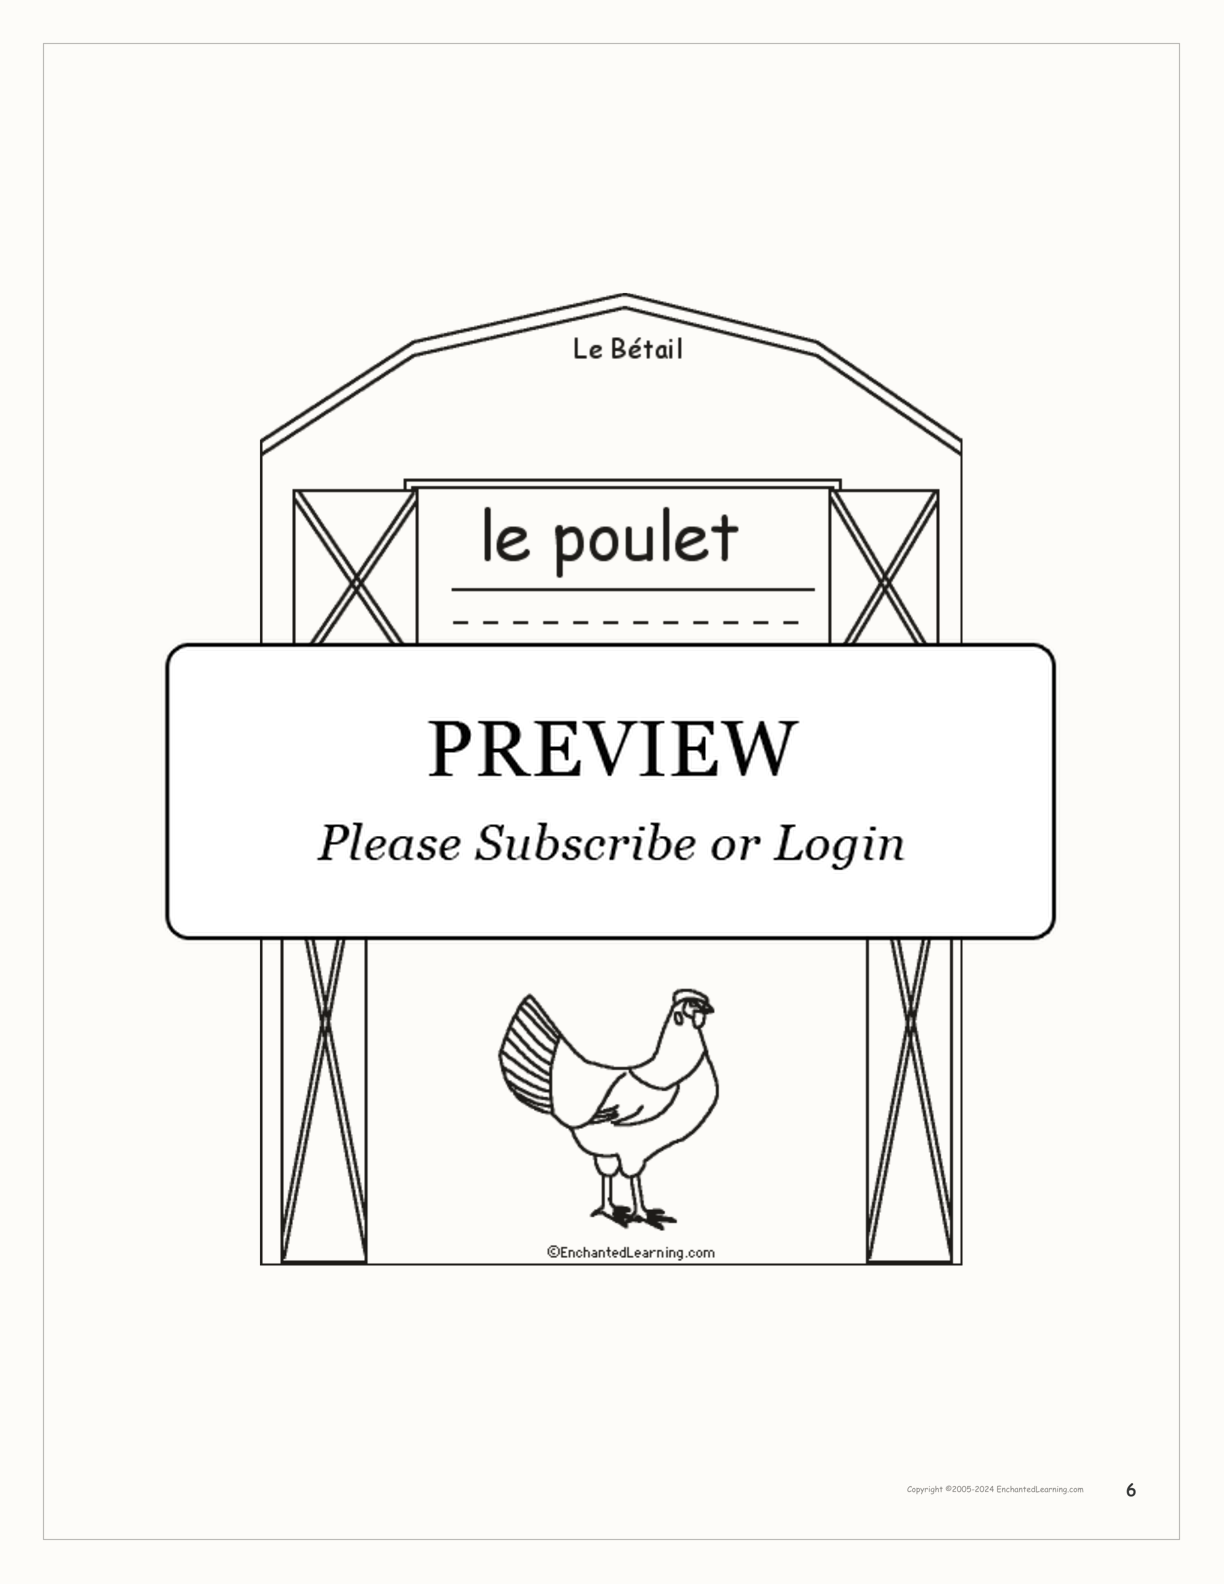 Bétail (Livestock) interactive printout page 6